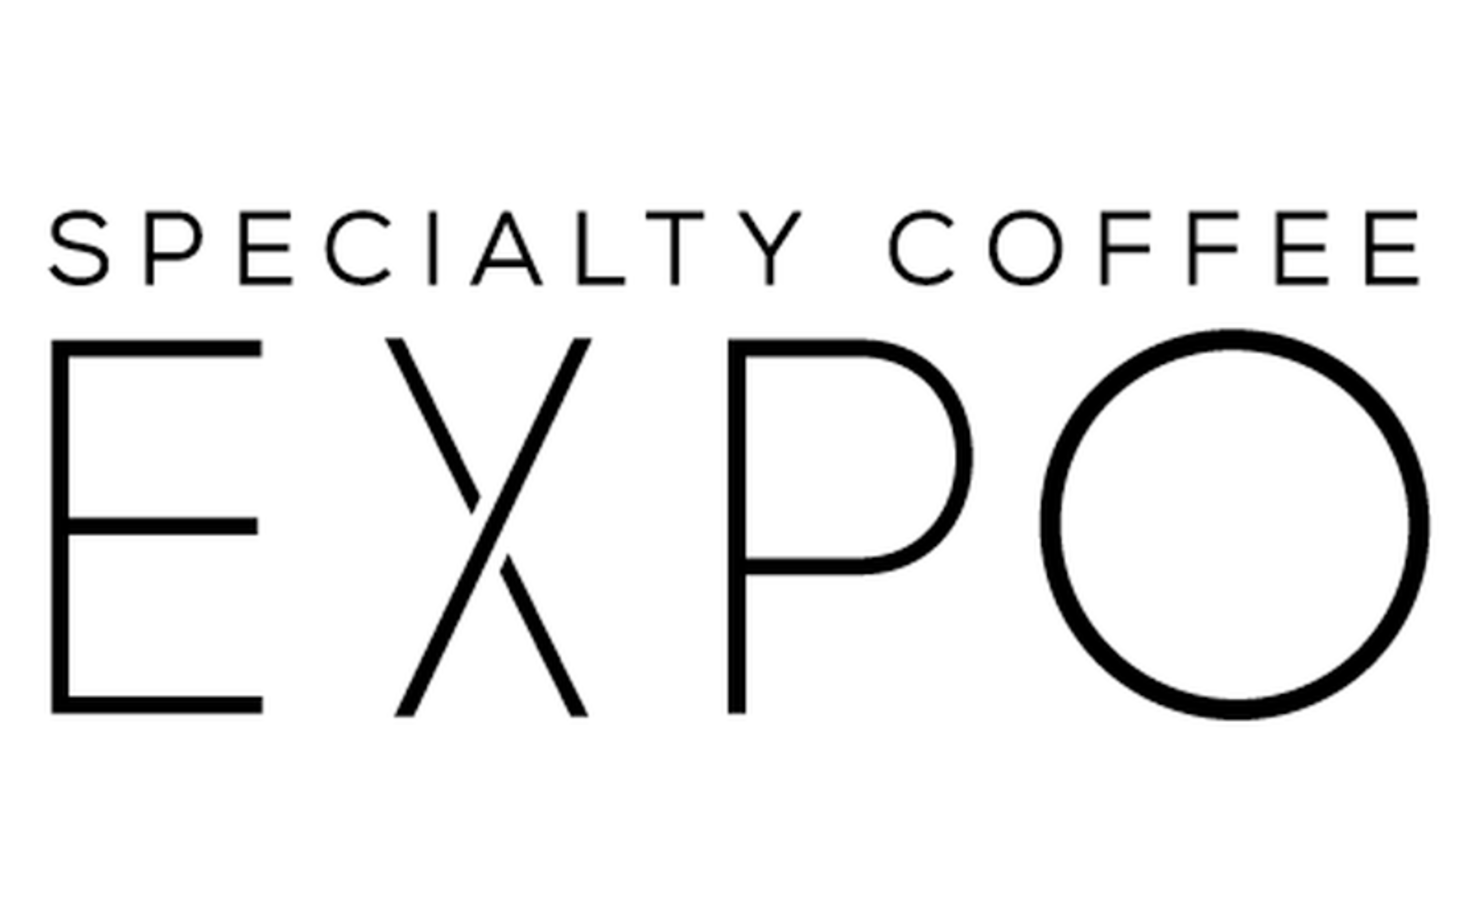 Specialty Coffee Expo